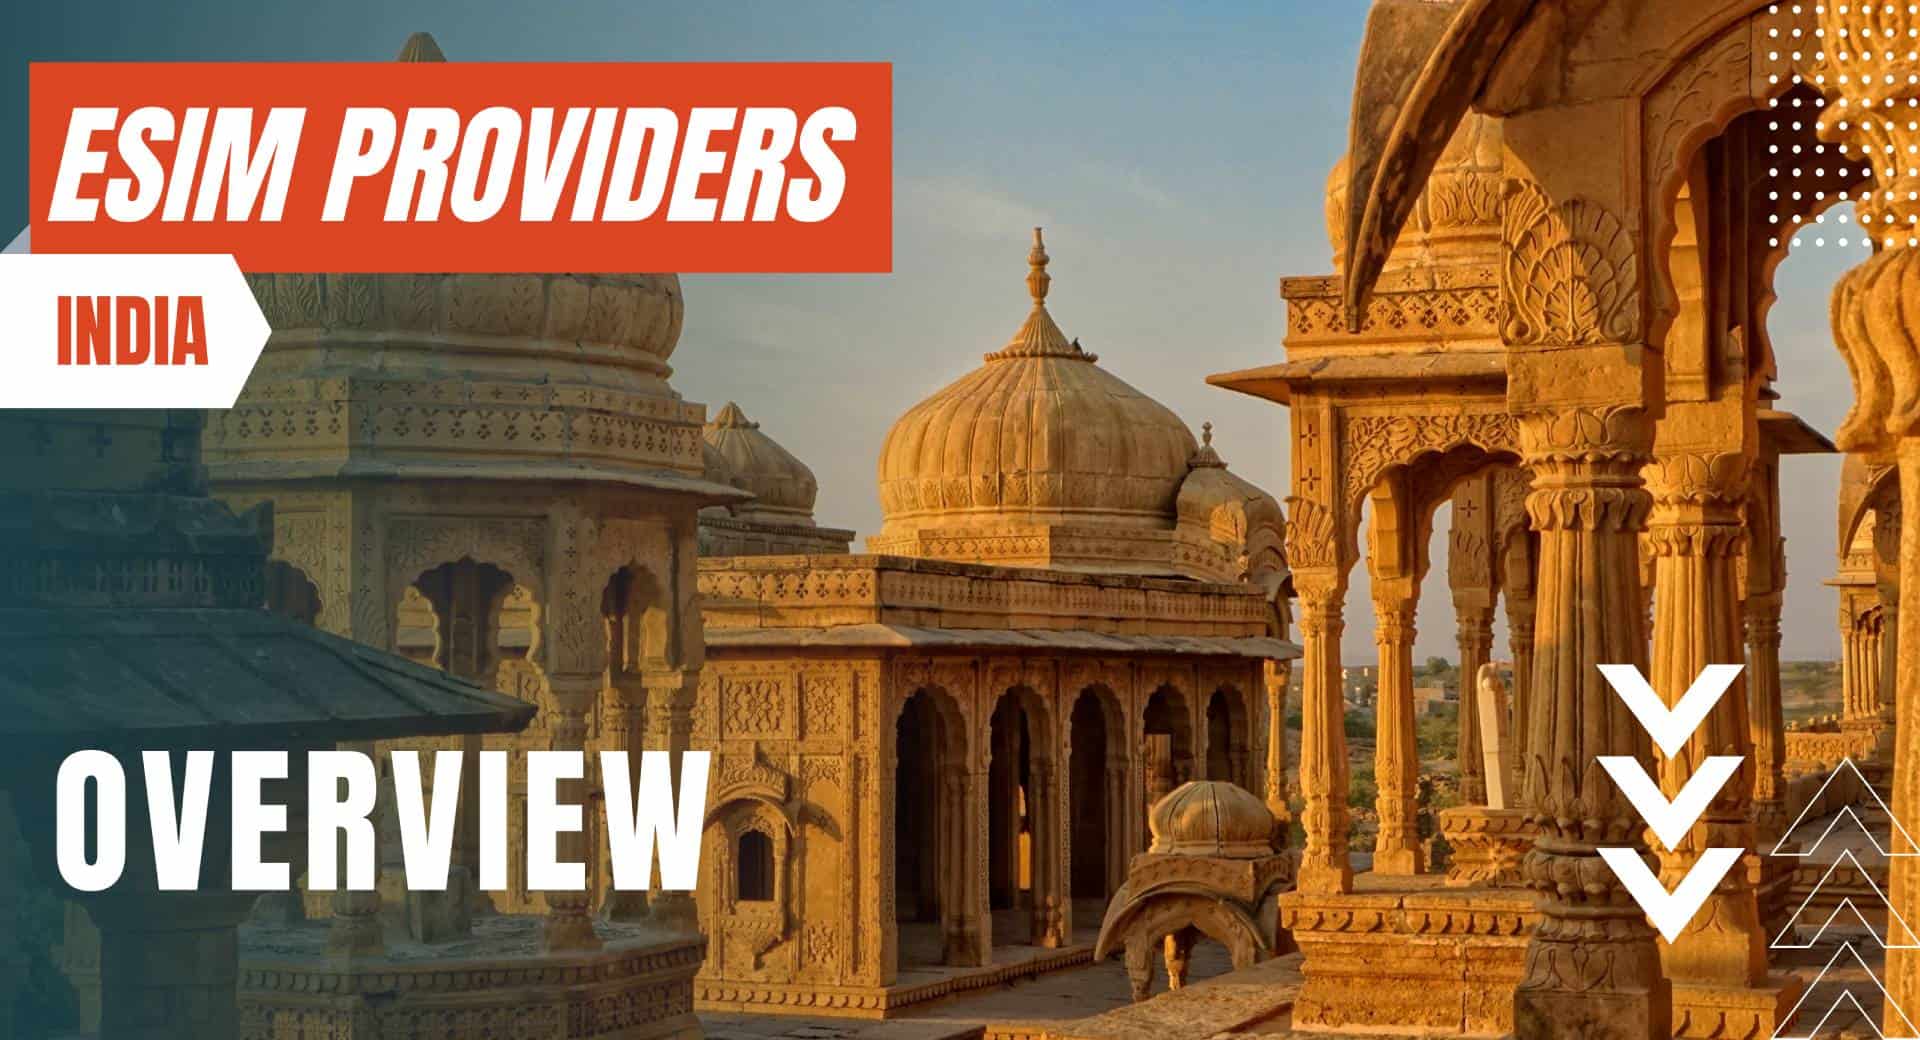 esim providers overview india